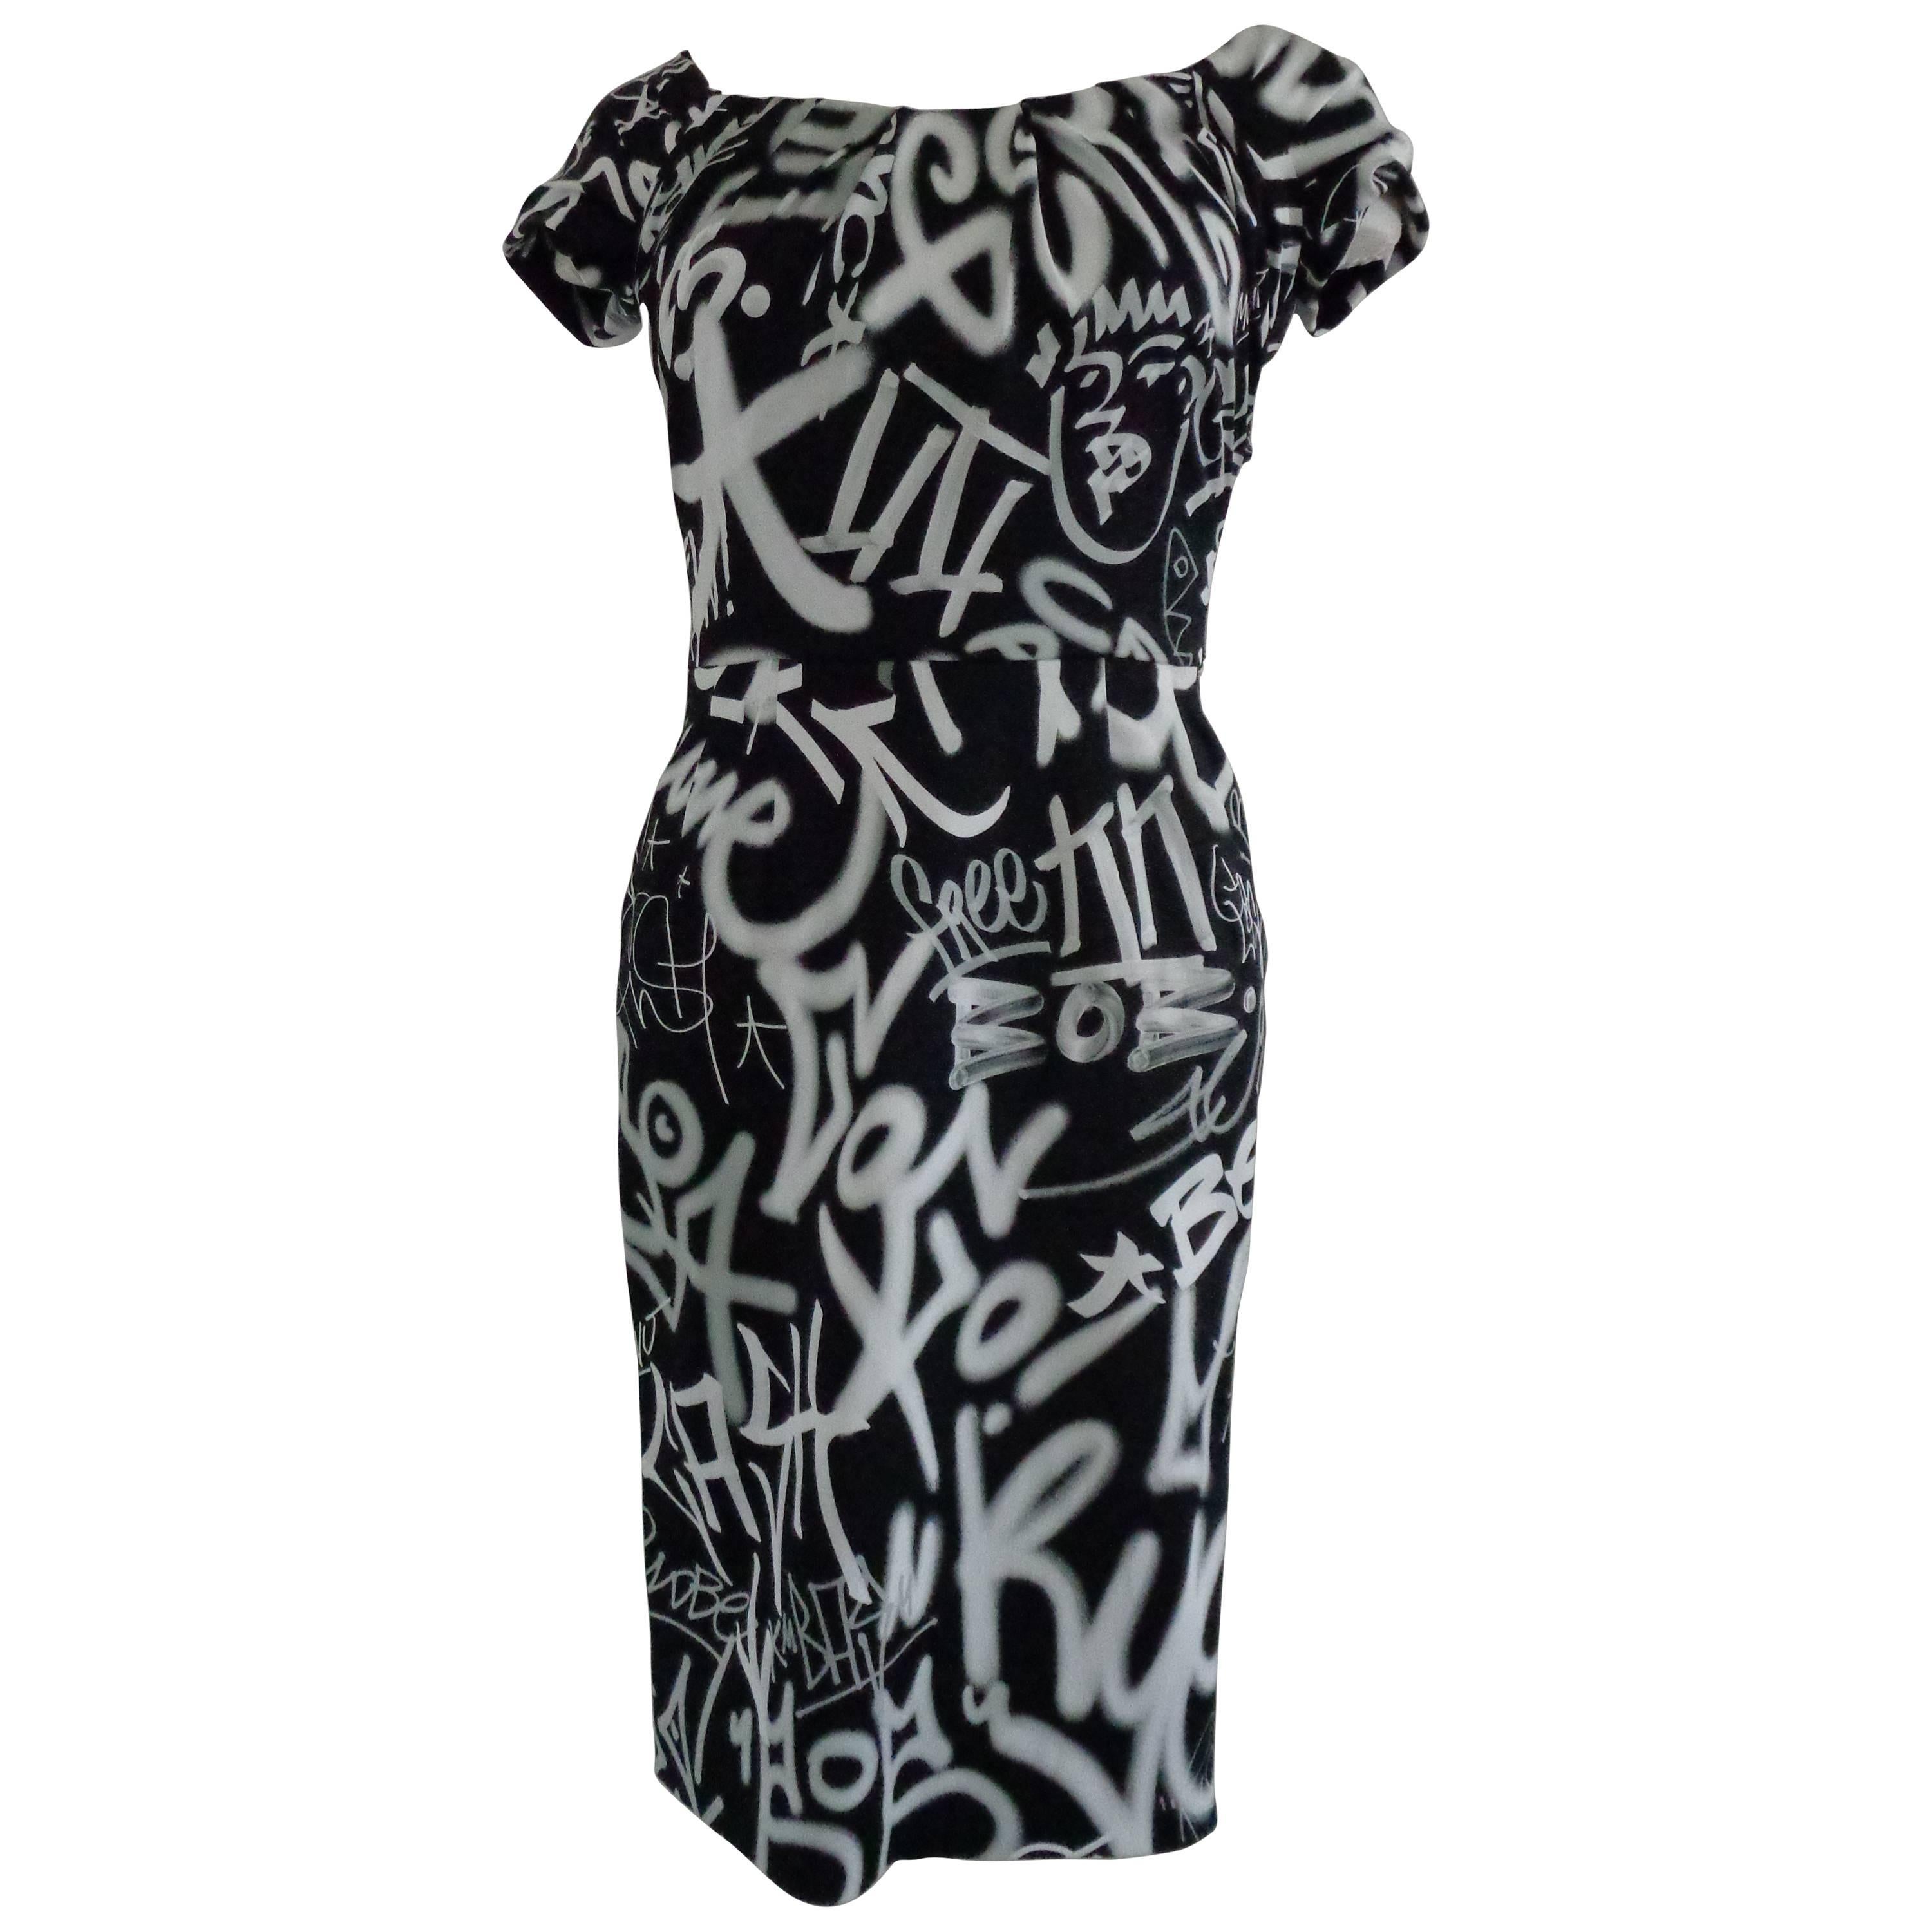 Moschino Couture Black White Graffiti Print Dress NWOT For Sale